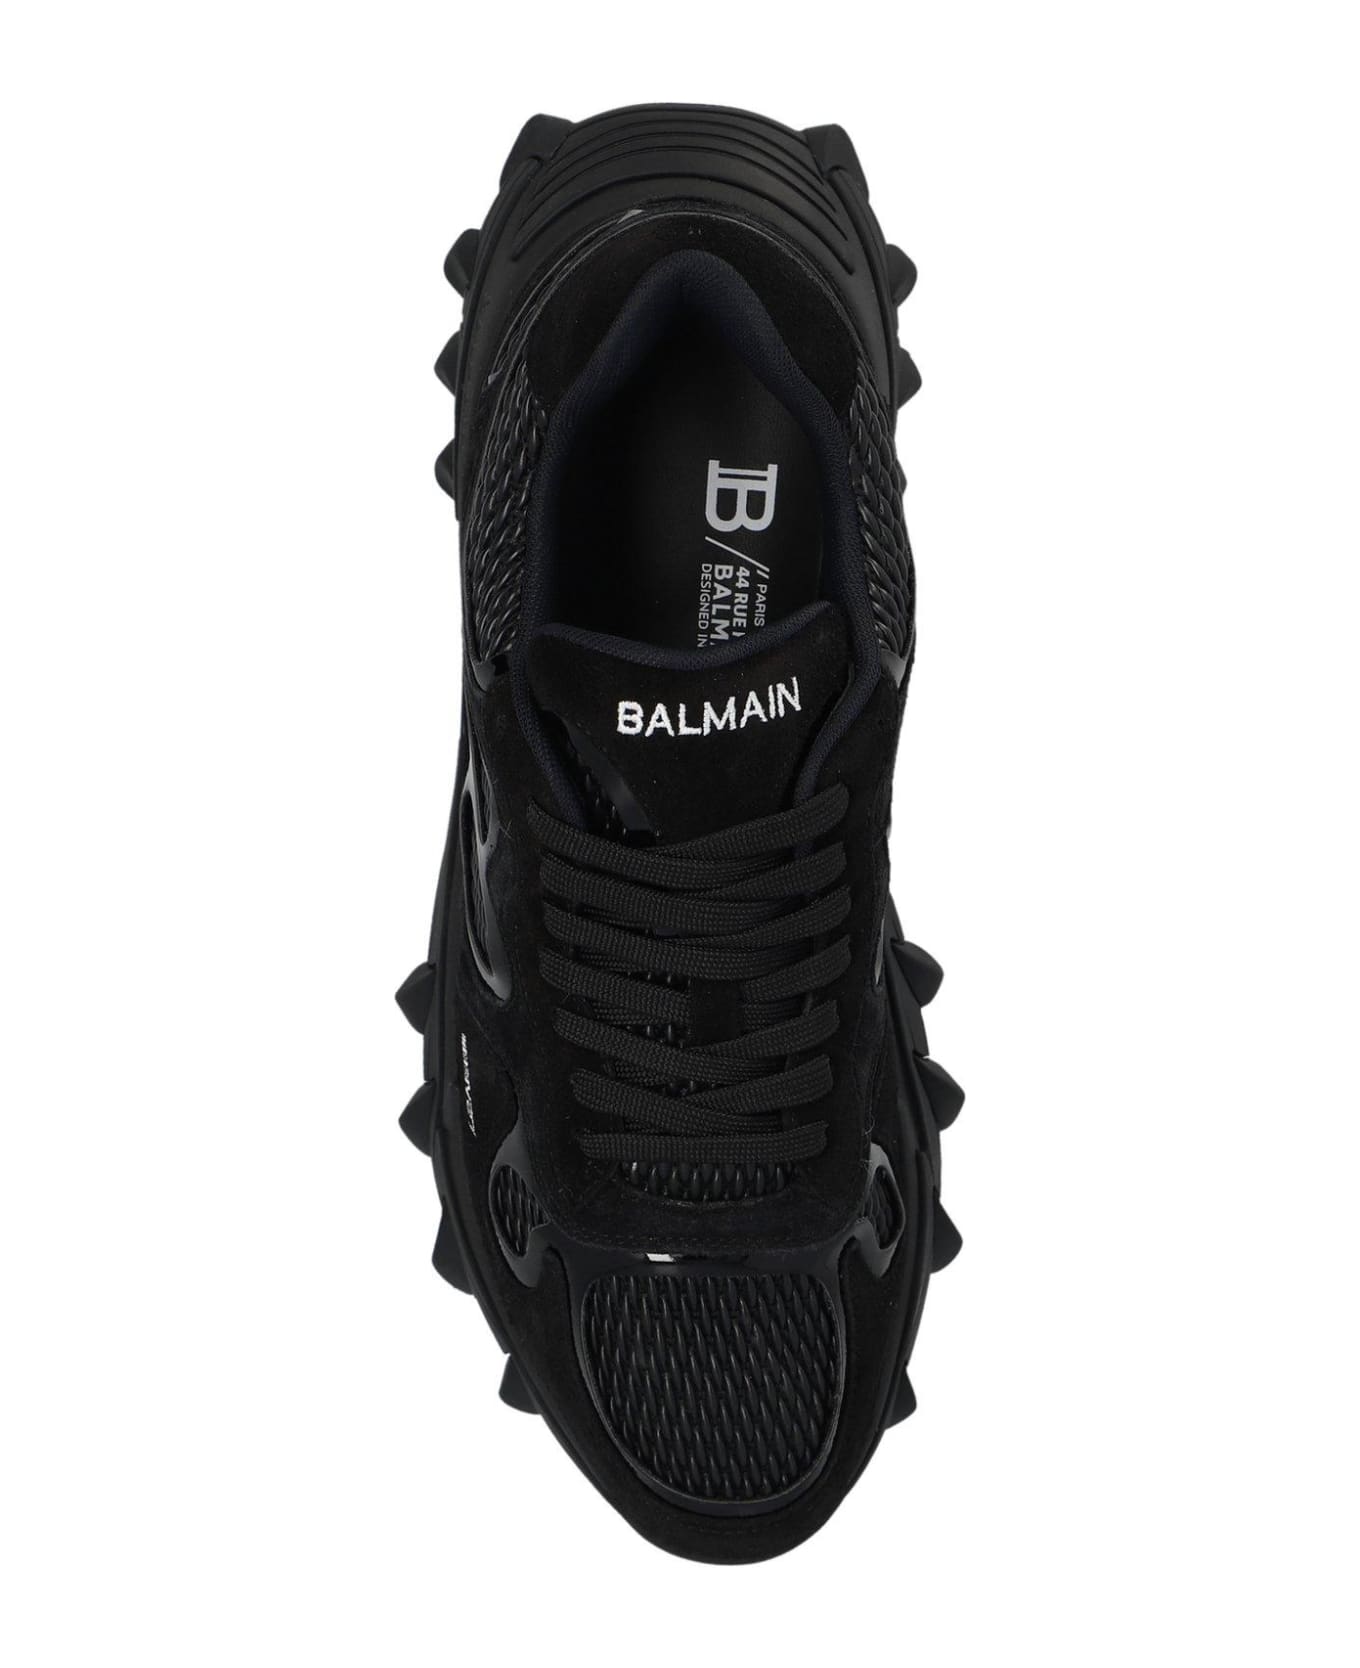 Balmain B East Sneakers - Noir スニーカー